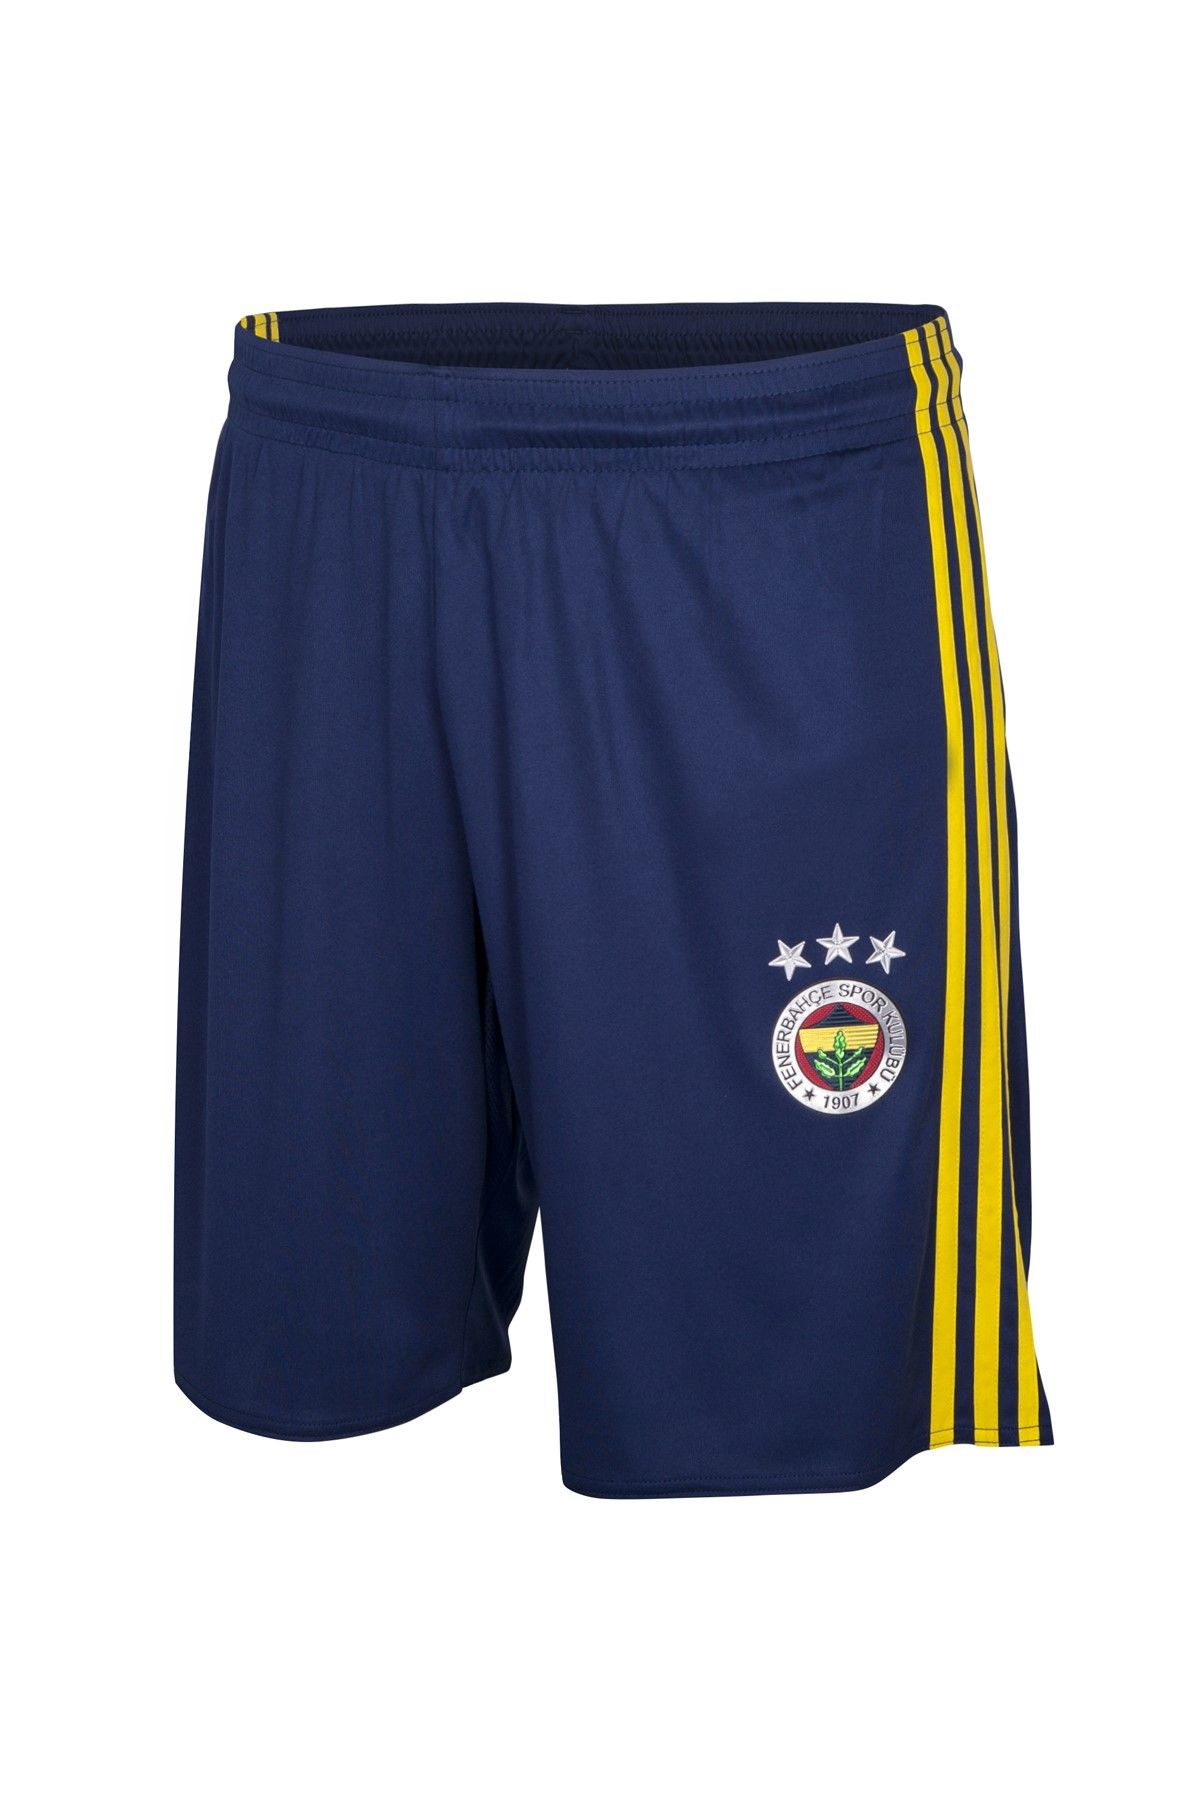 Fenerbahçe adidas Fb 16 Home Sh Rep J Lacivert Sarı Unisex Çocuk Şort 100402707